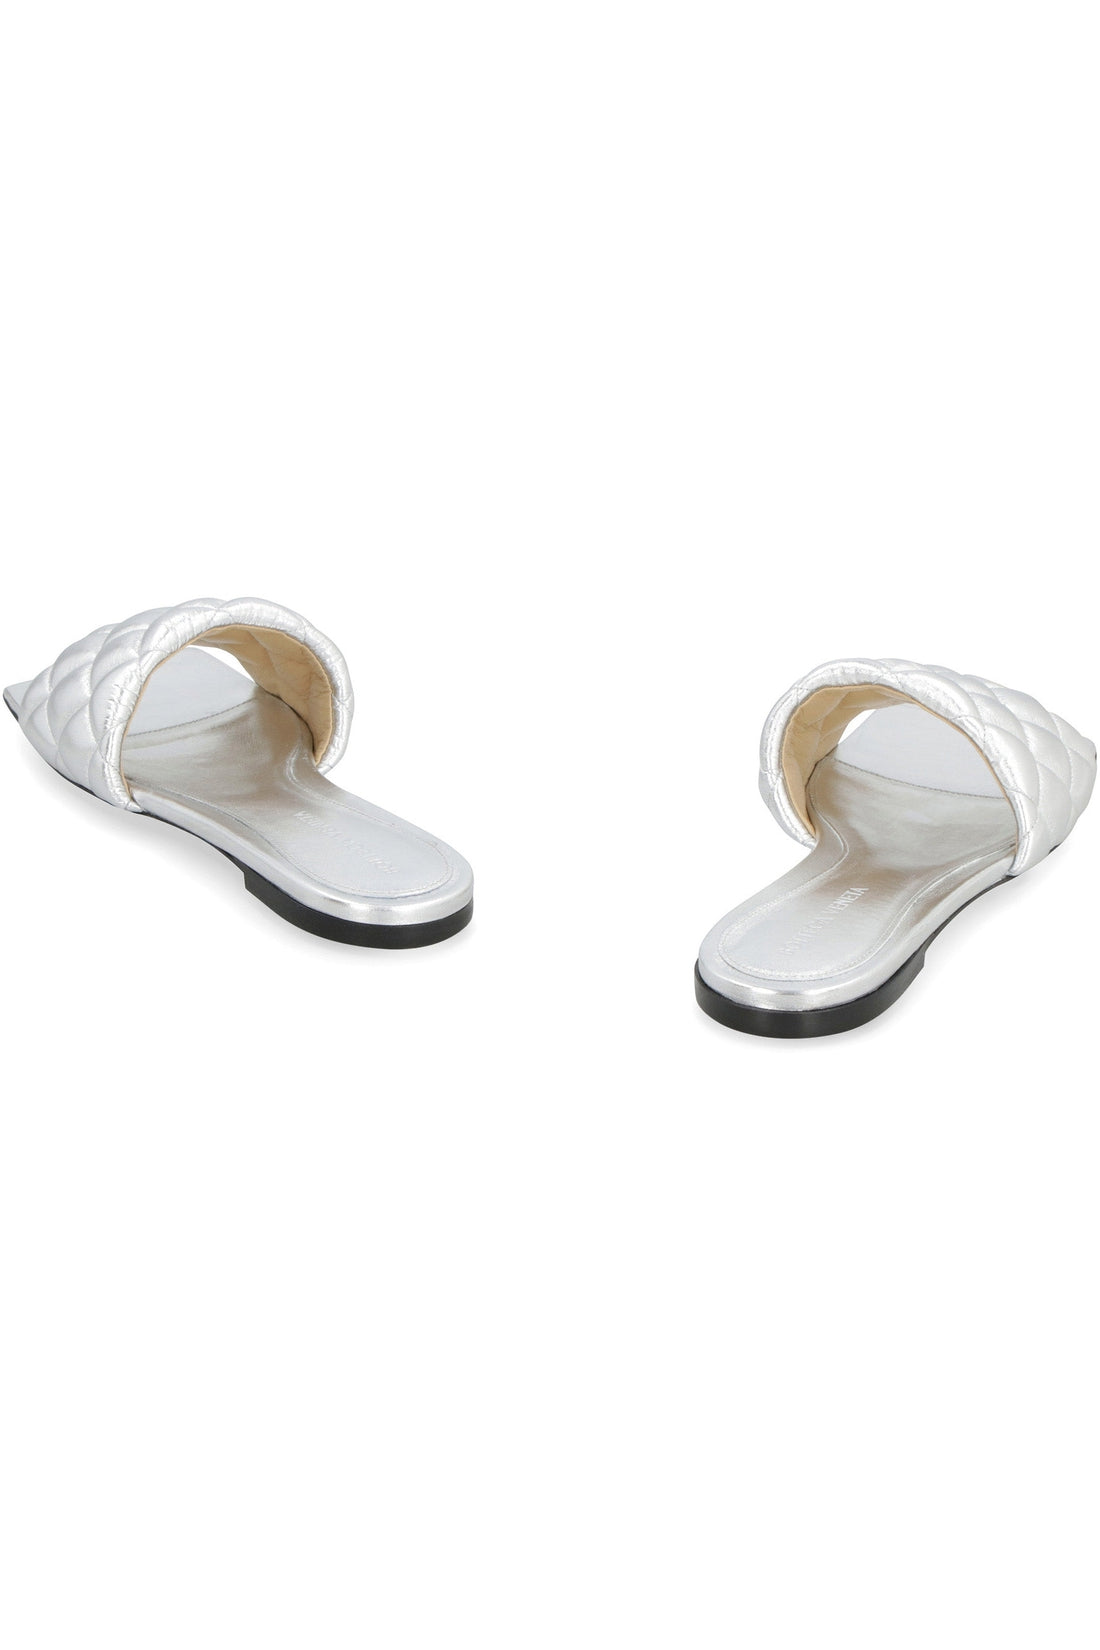 Bottega Veneta-OUTLET-SALE-Flat Padded metallic leather sandals-ARCHIVIST